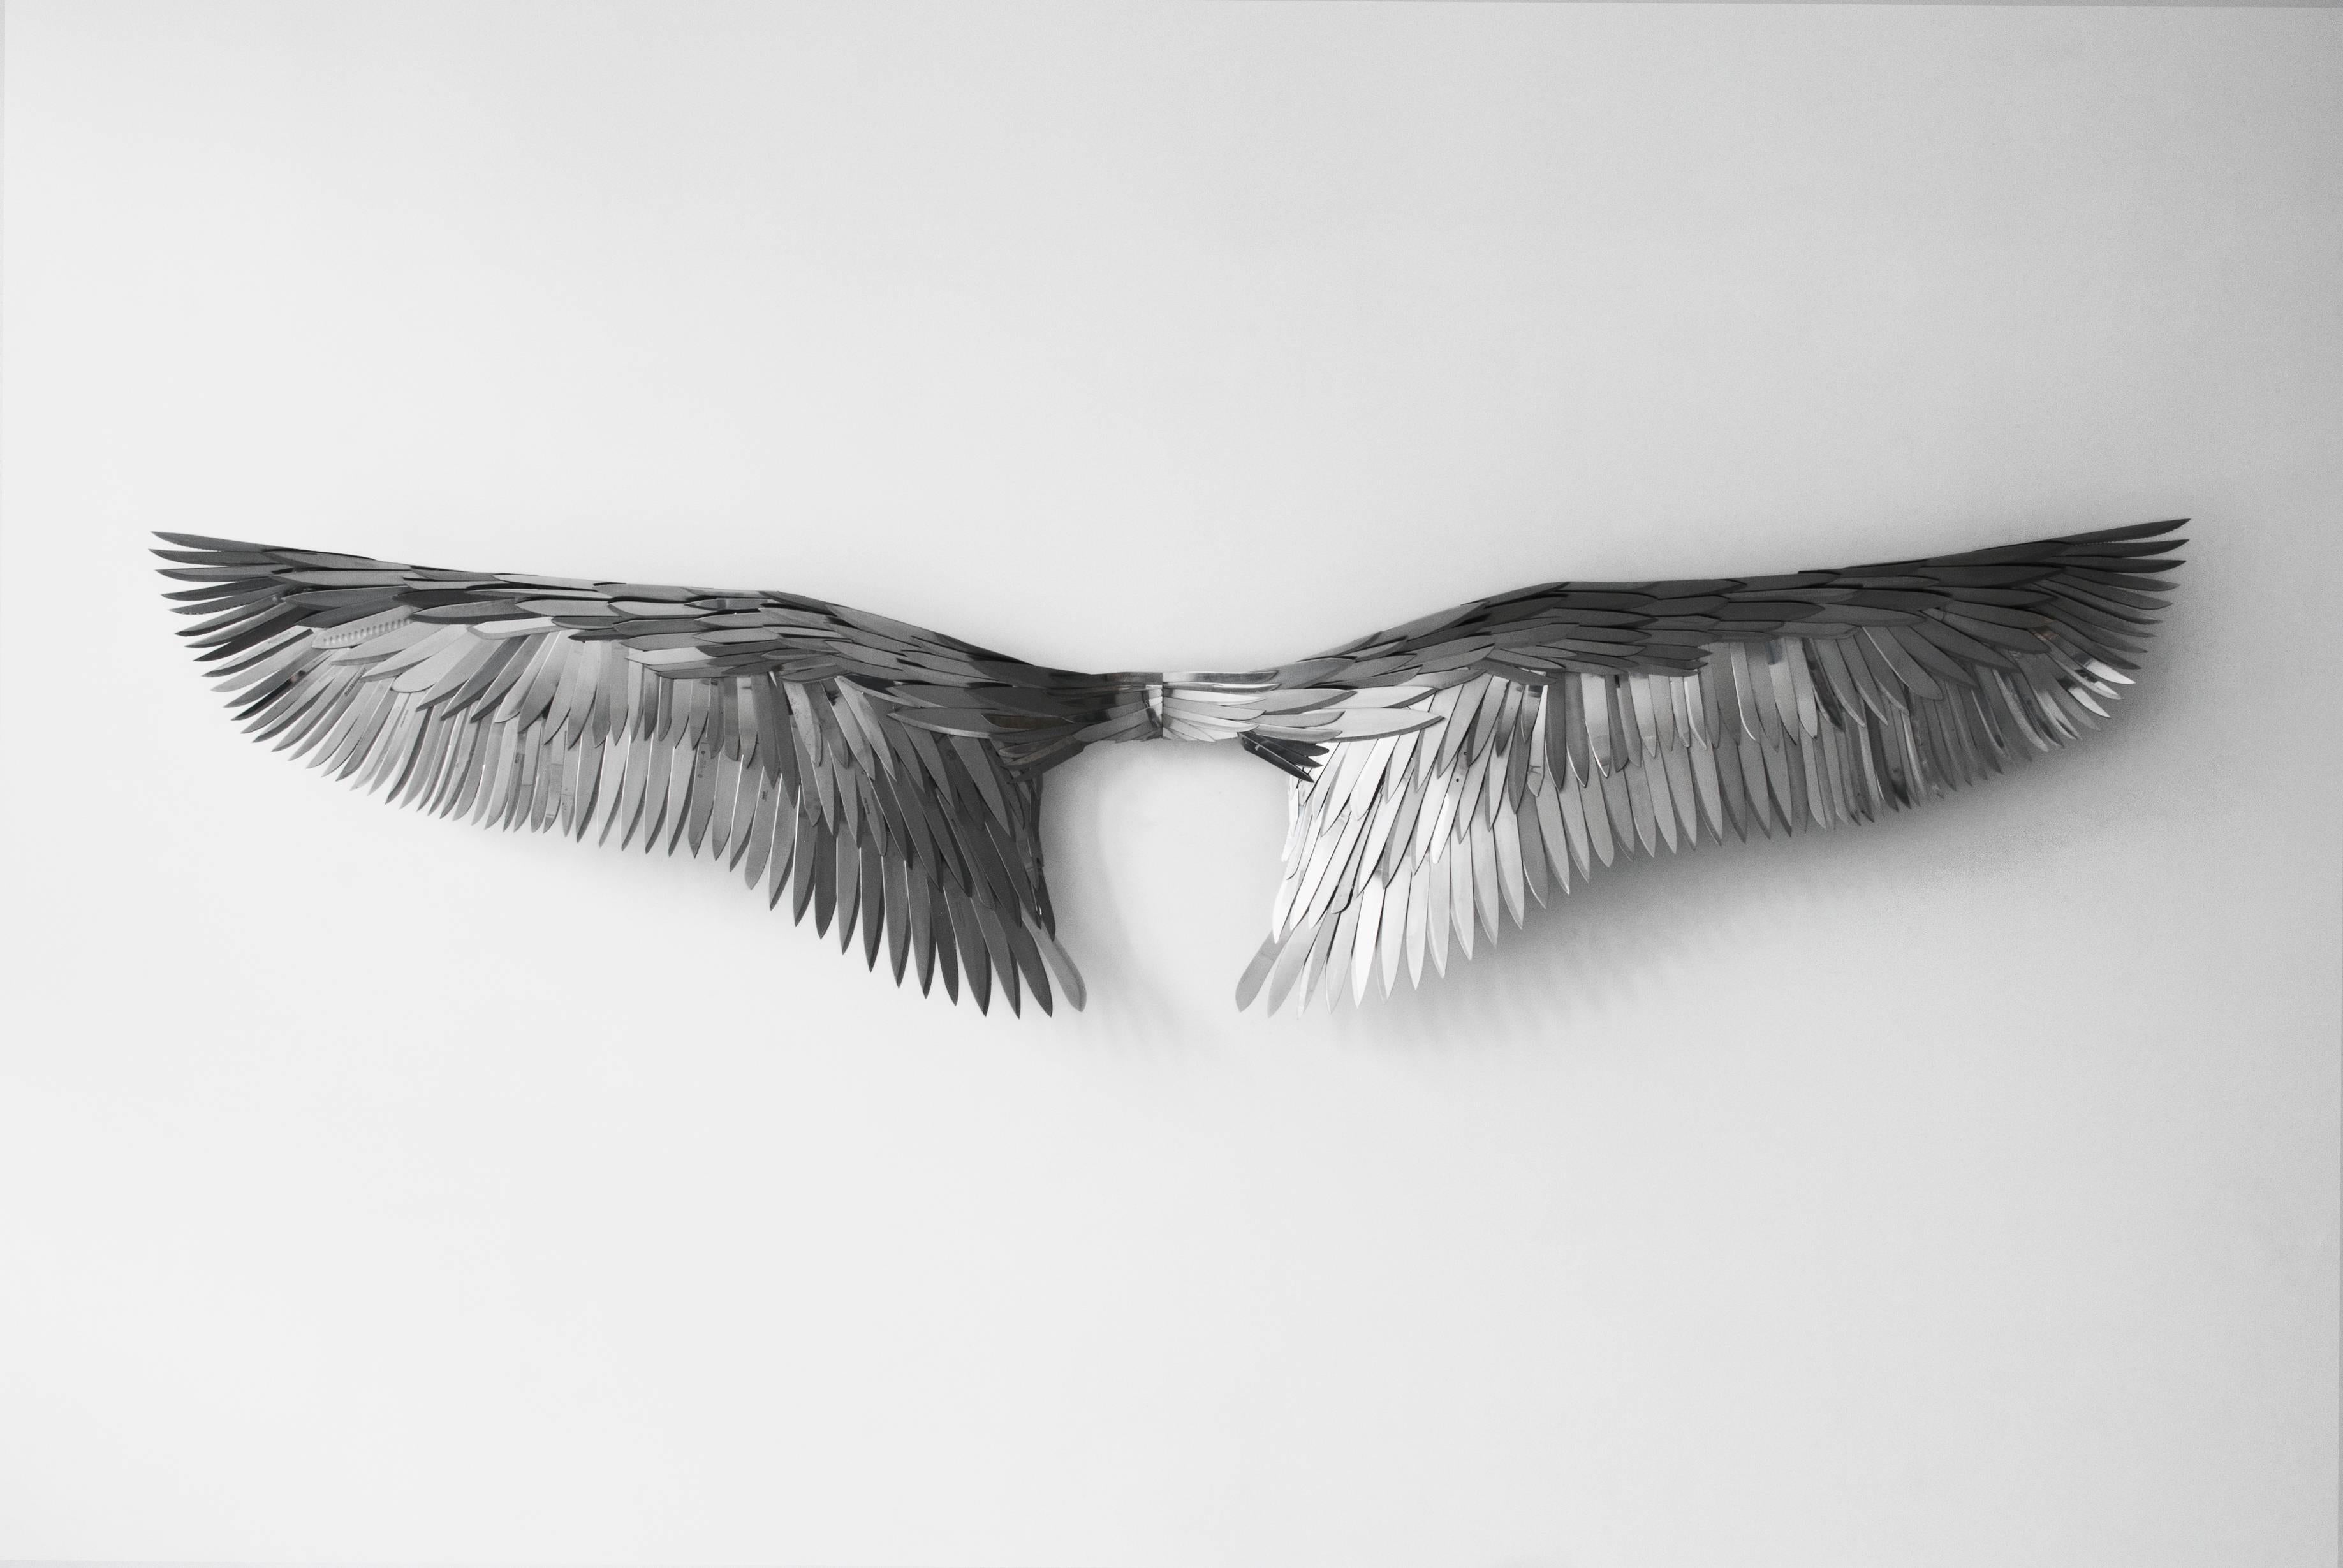 Aerialist - Sculpture by Paul Villinski